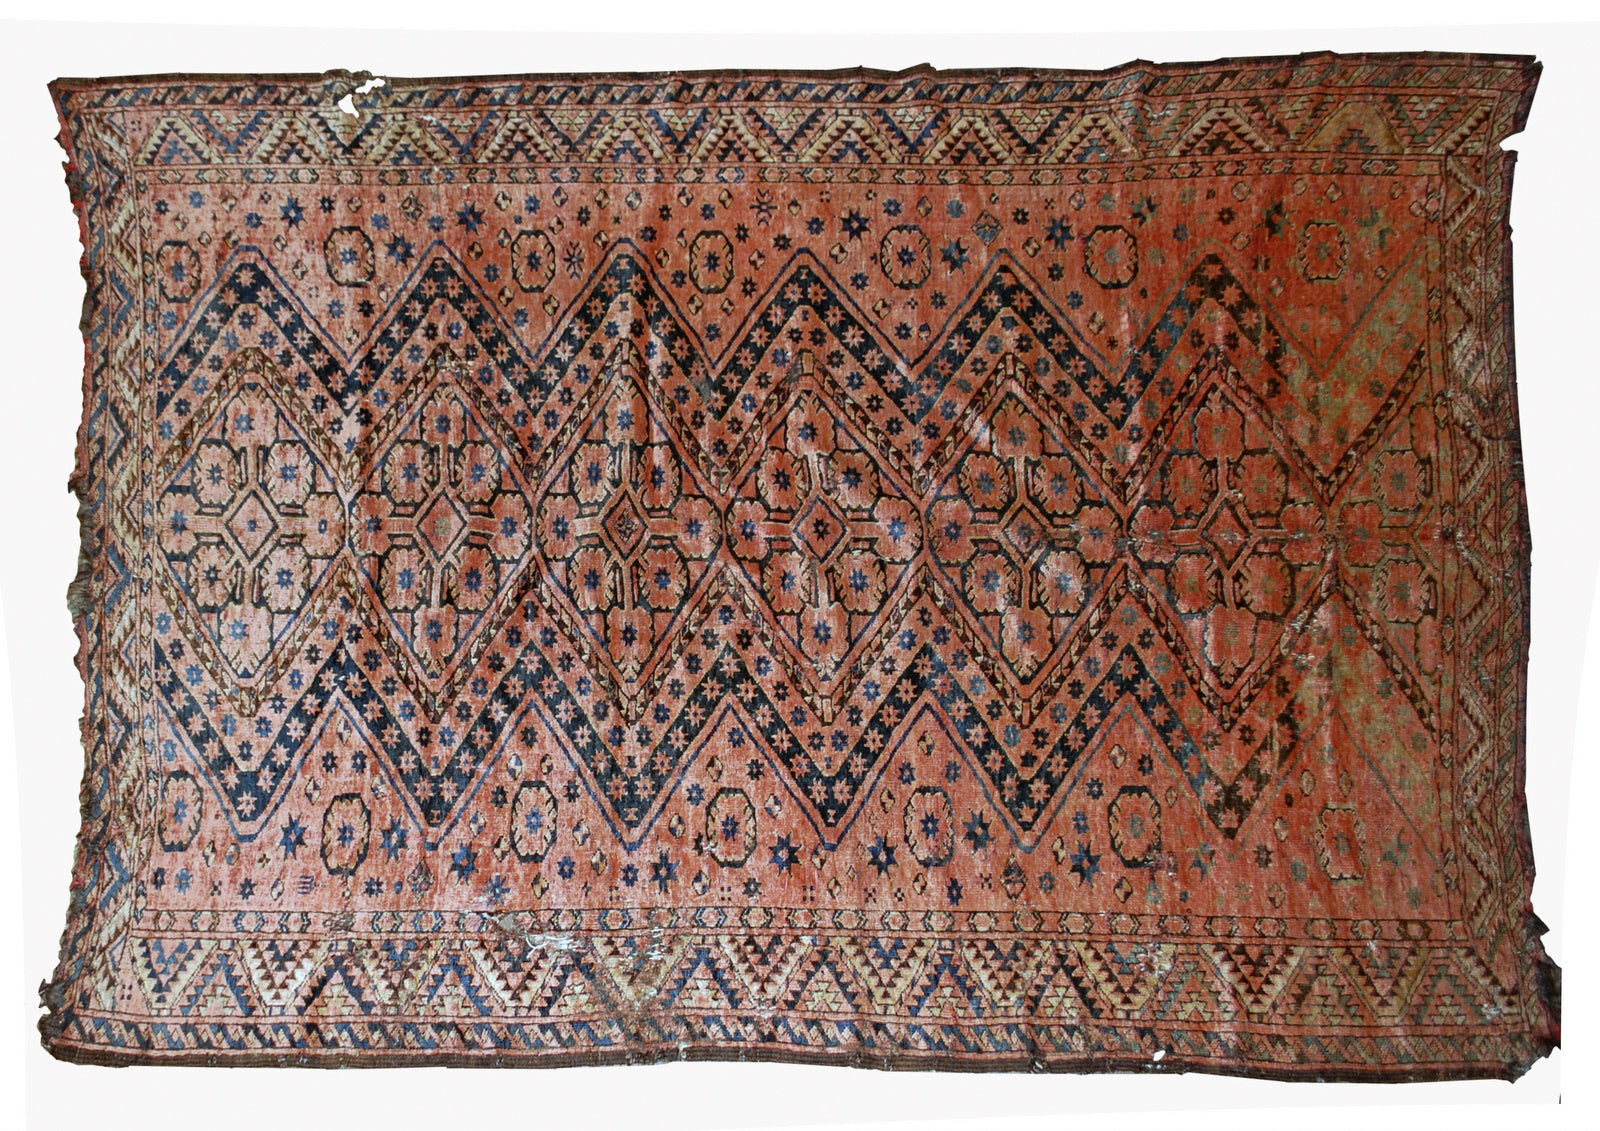 Handmade antique collectible Uzbek Beshir rug 1900s